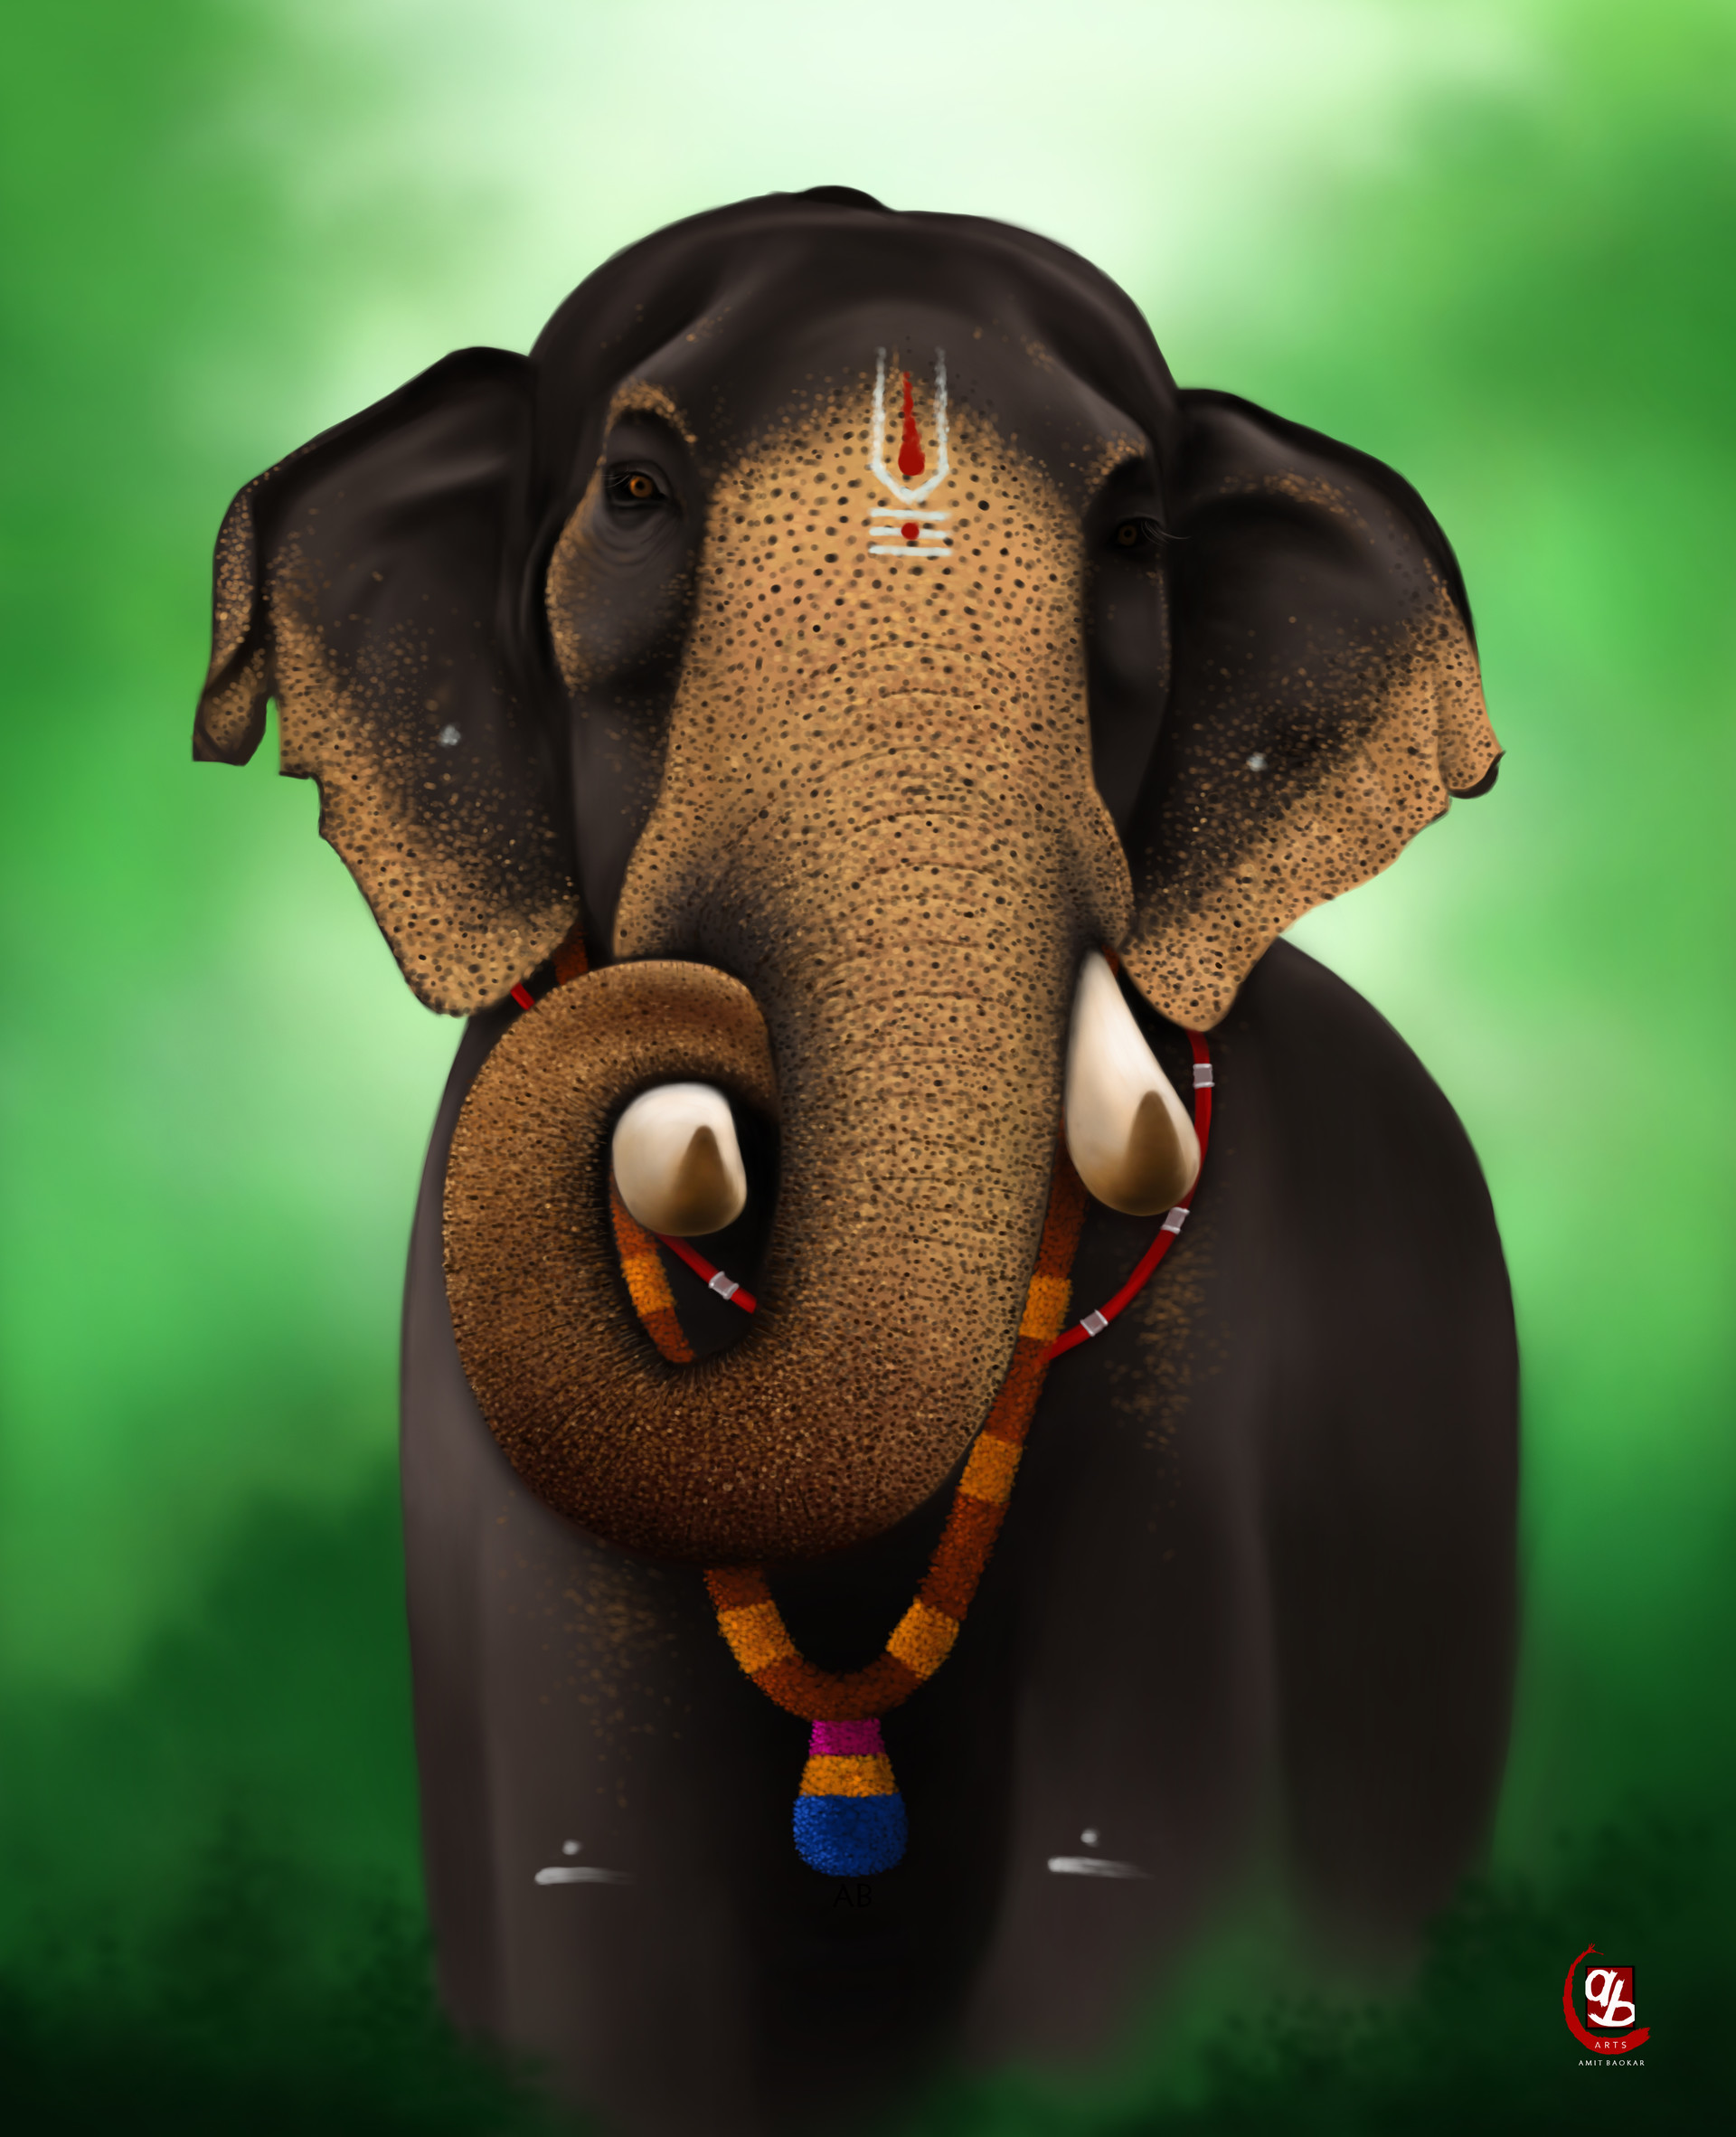 Popular Elephant Image for Phone